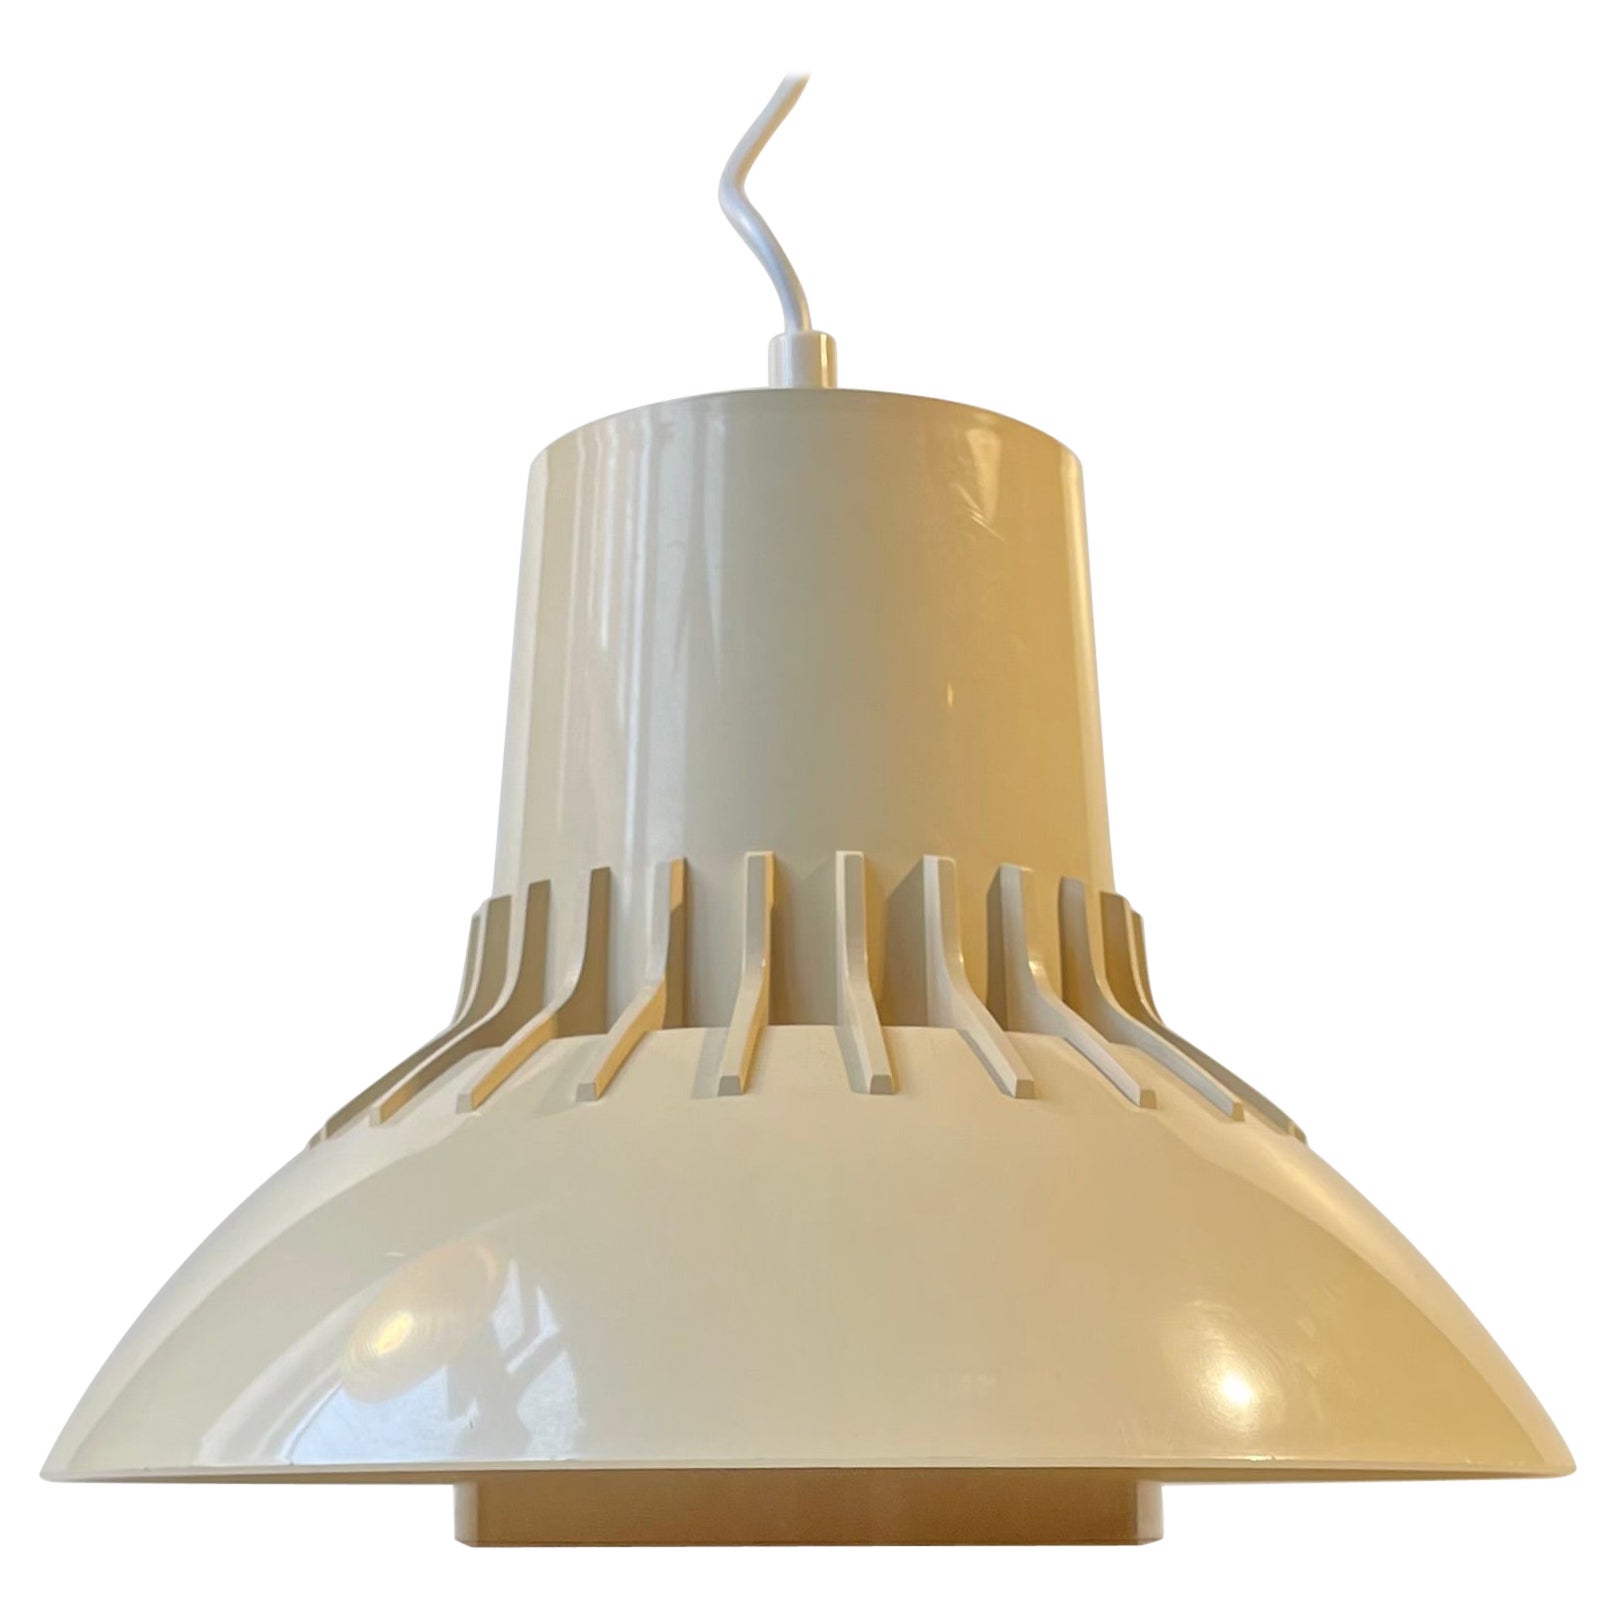 Danish Modern Svend Middelboe Ceiling Pendant Lamp in Cream Plastic, 1970s